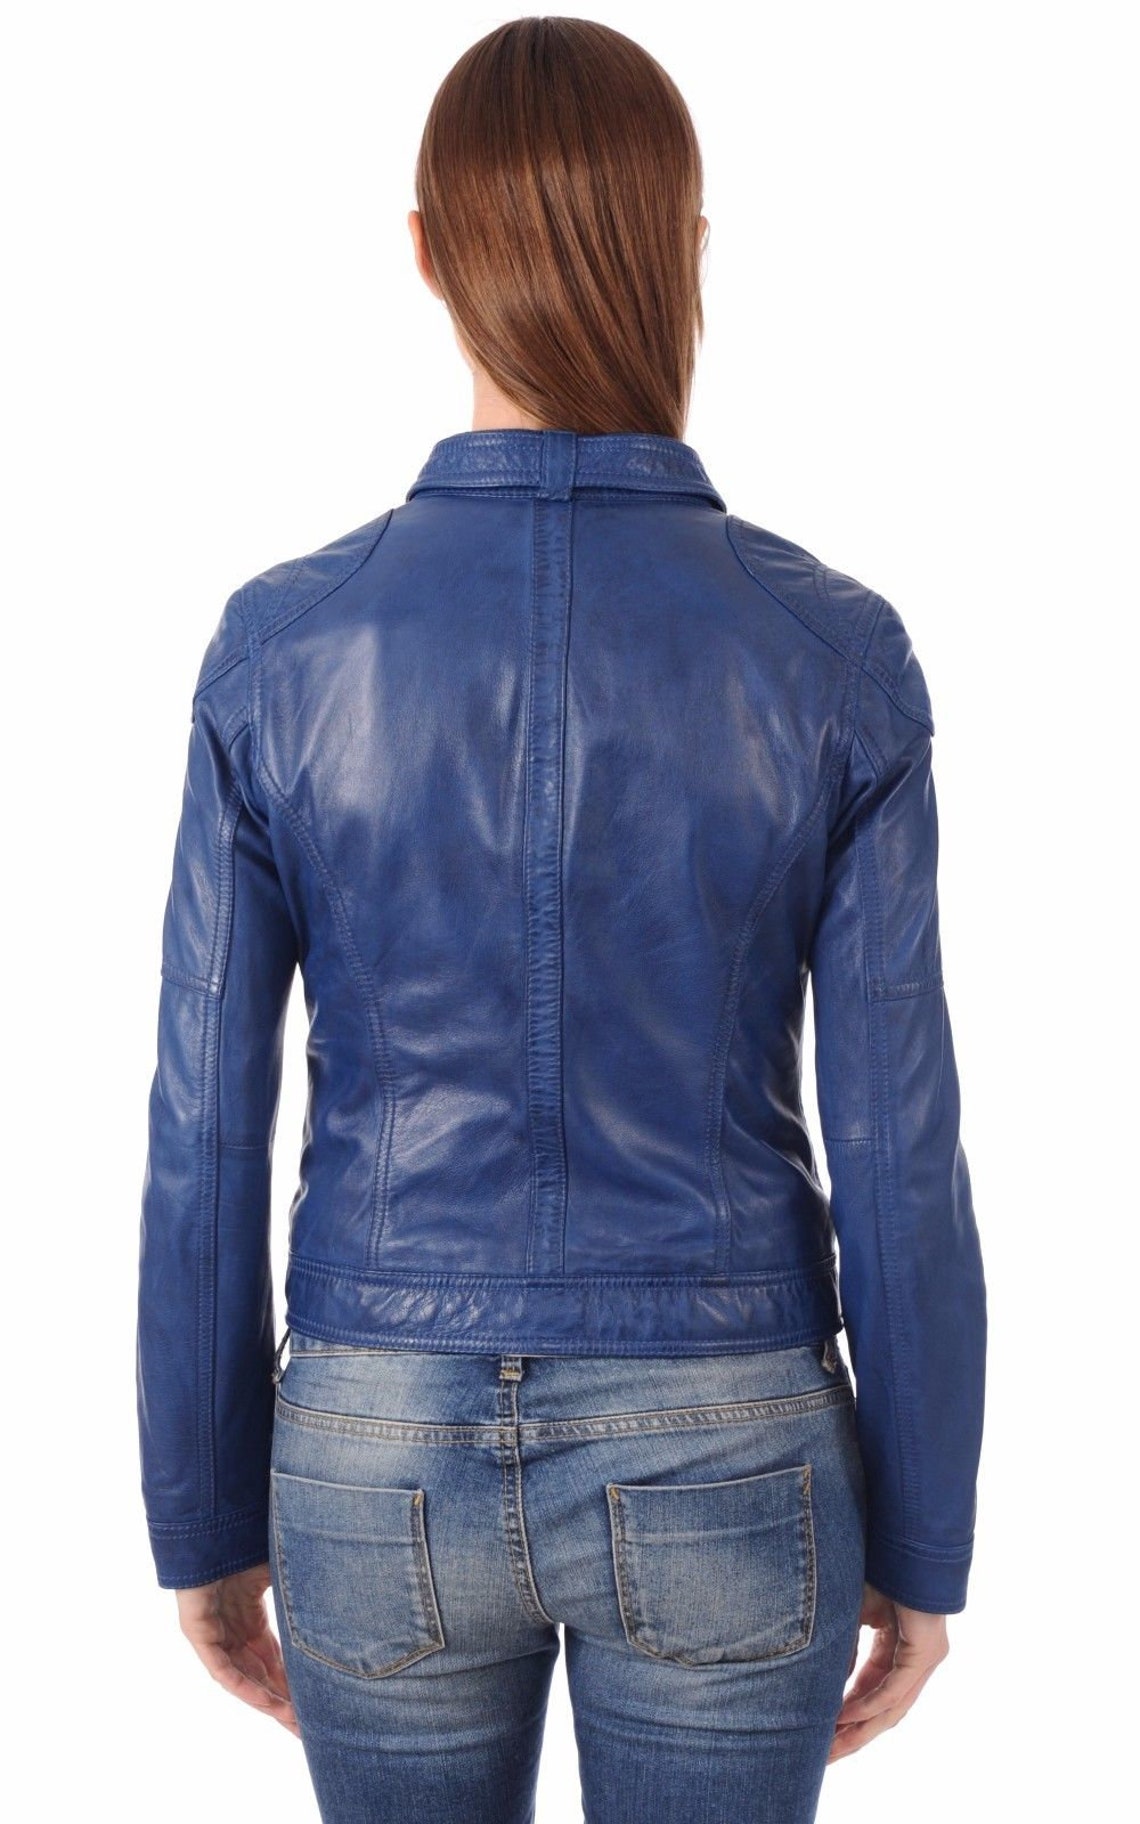 Leather Jacket for Women's, Biker Jacket for Women's, Motorcycle Blue ...